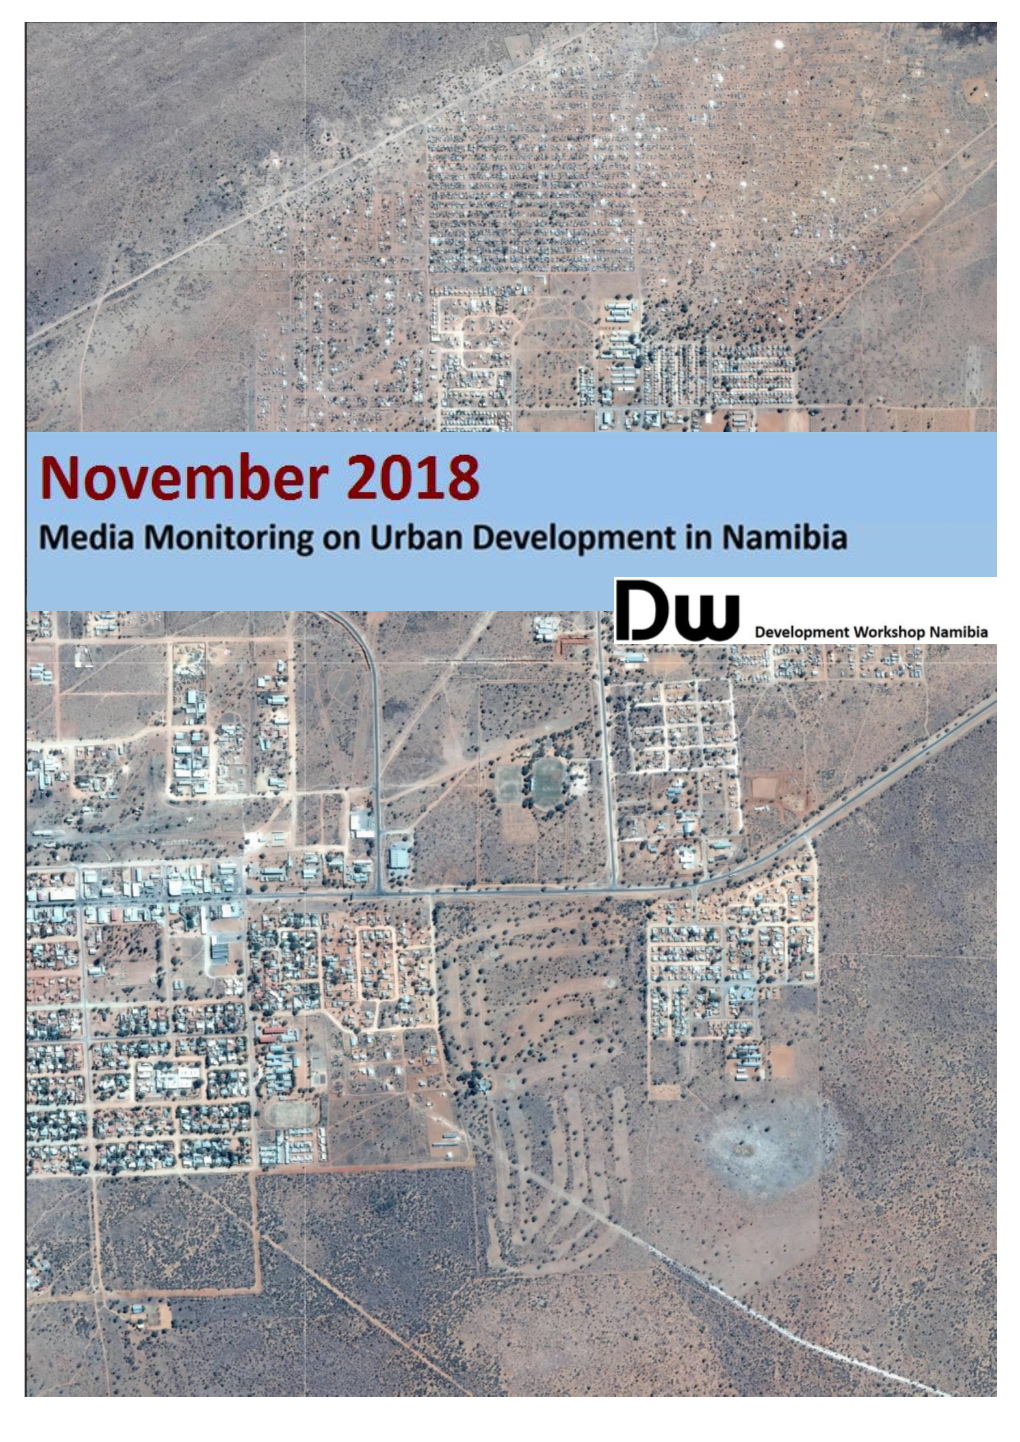 Media Monitoring on Urban Development in Namibia